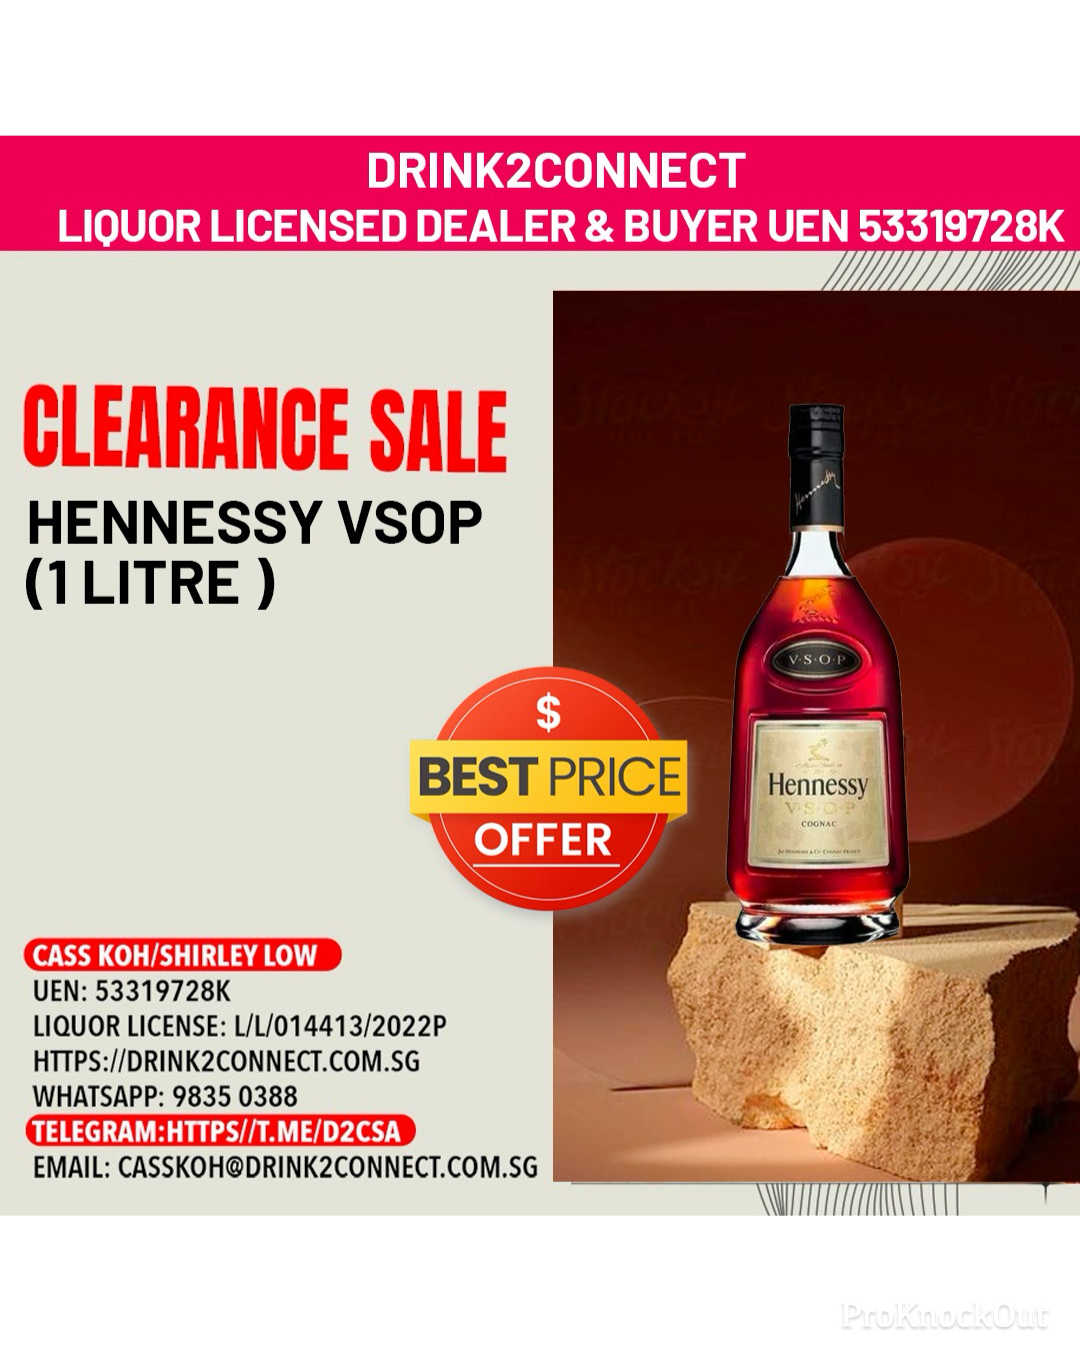 1 Litre Hennessy Vsop/Hennessy Cognac Sale Online/Hennessy Cognac Price Online